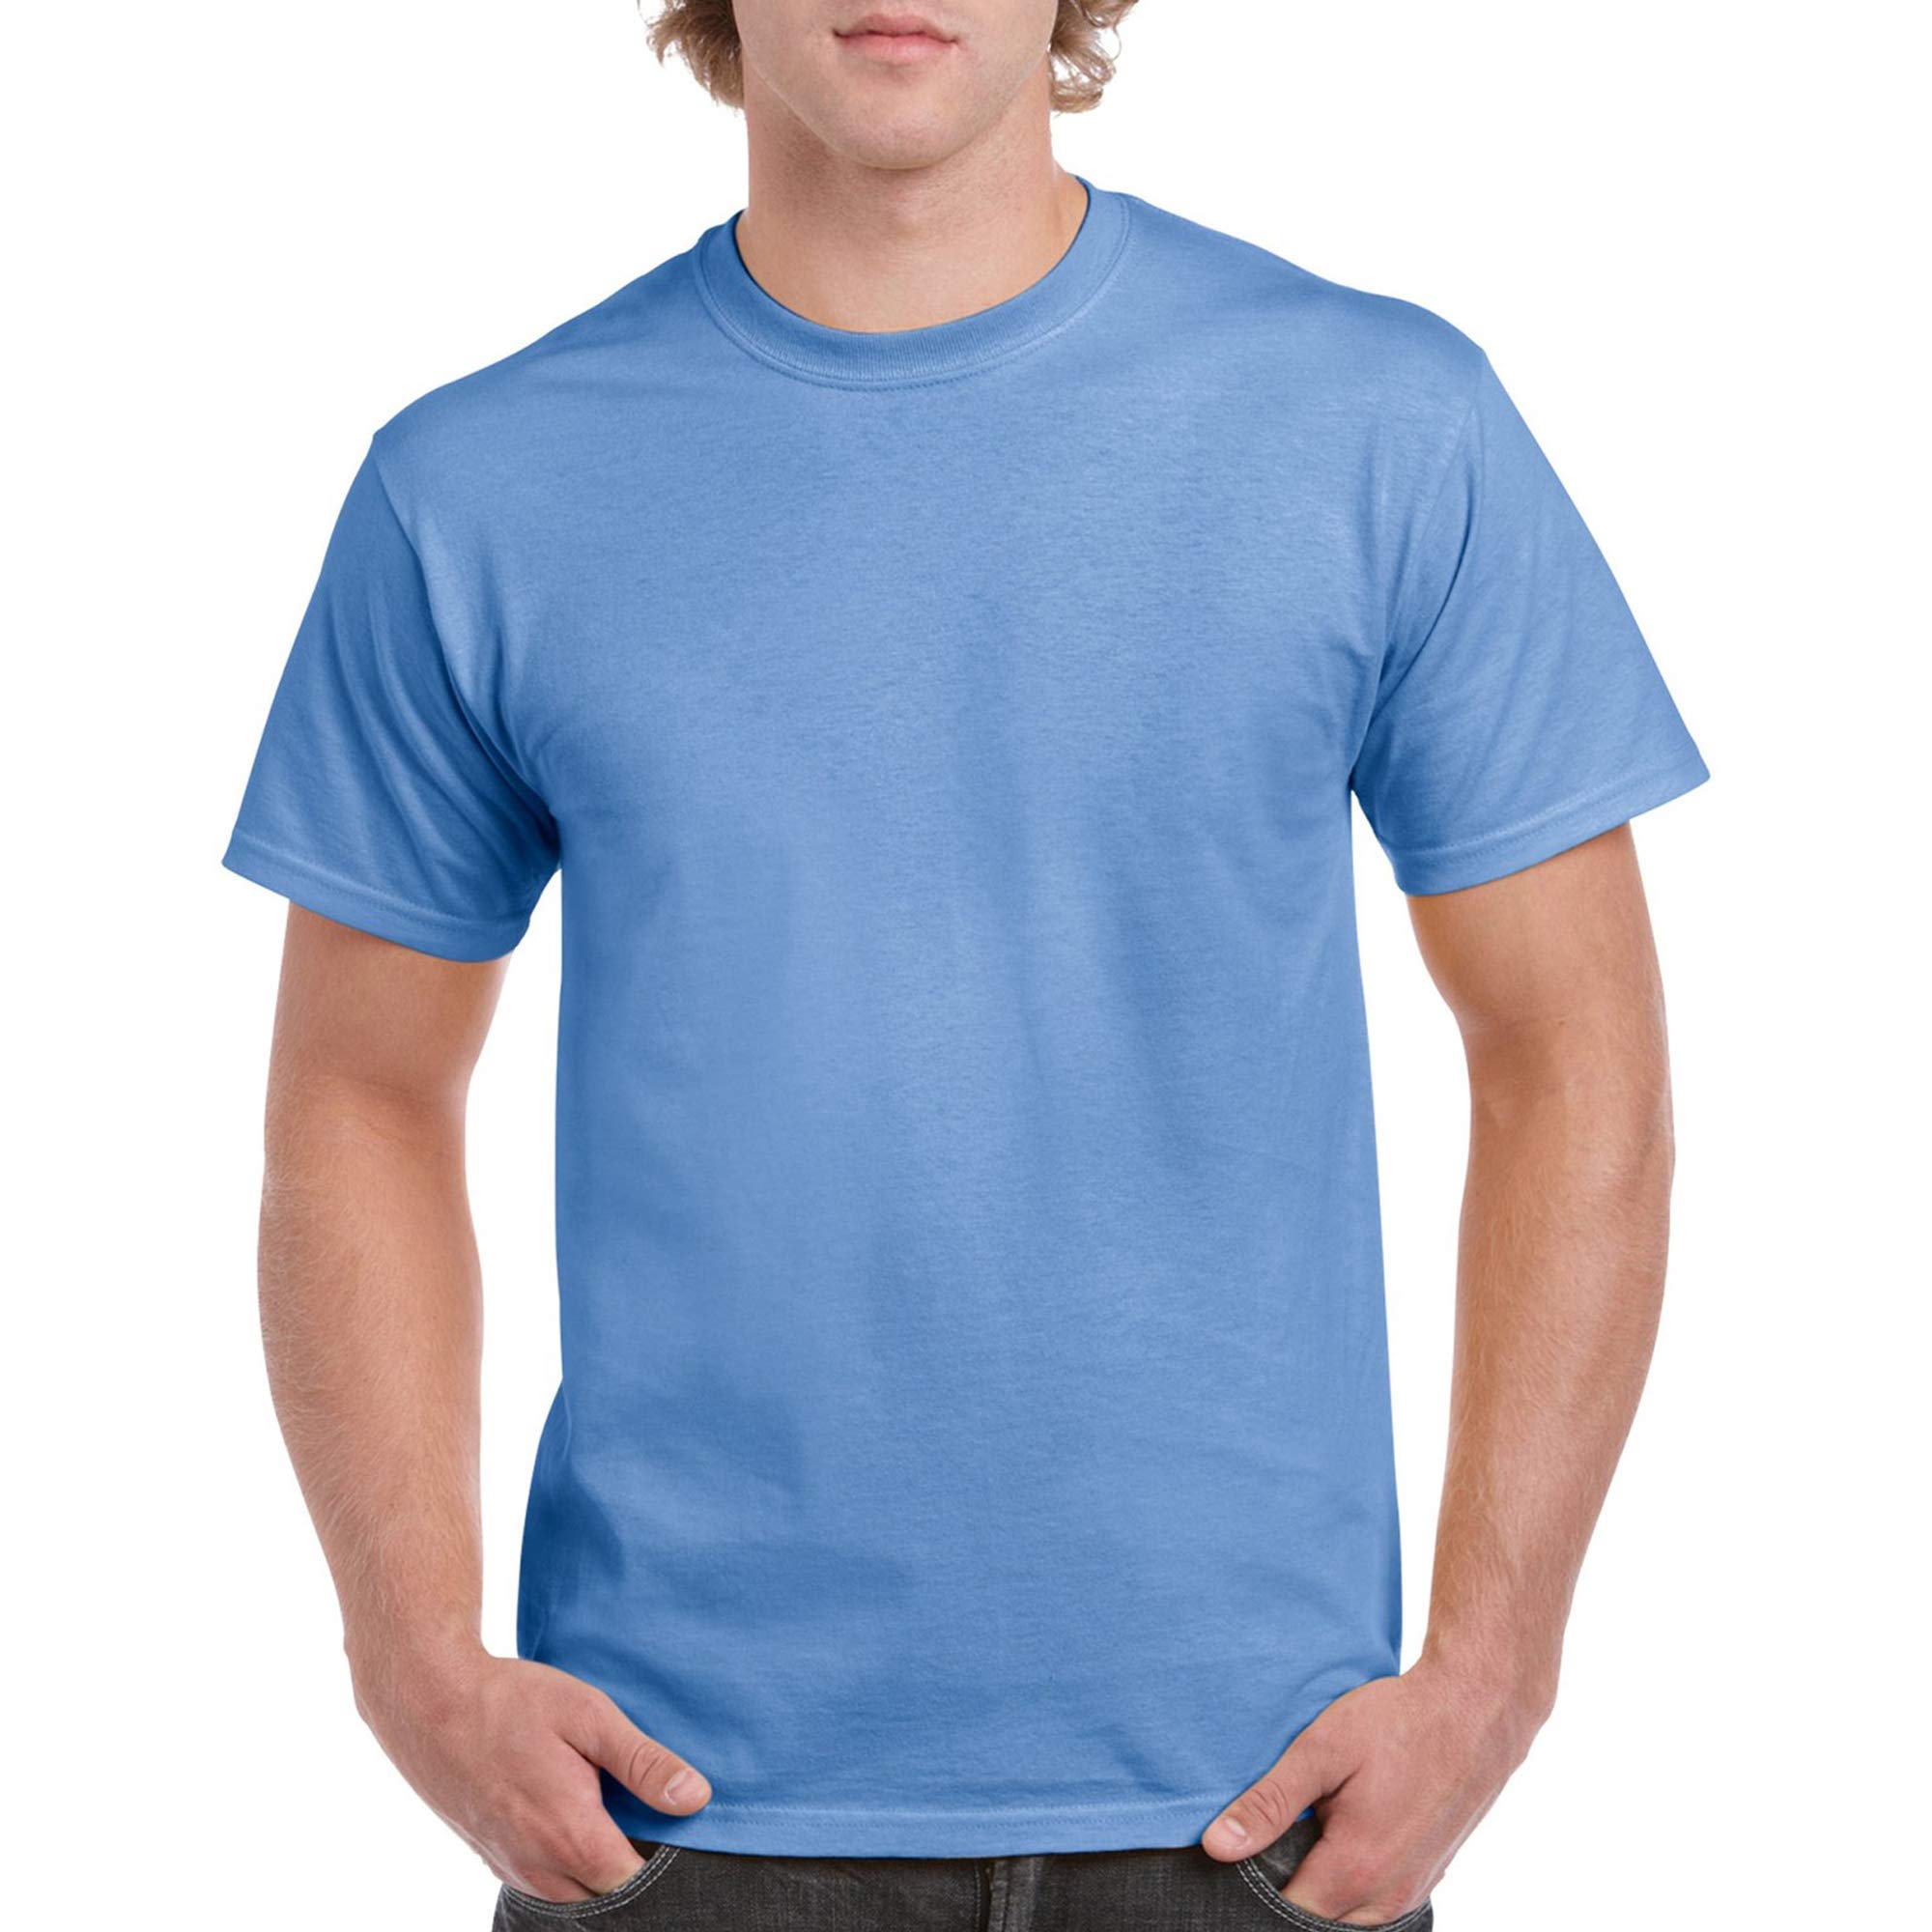 Gildan mens Heavy Cotton T-shirt, Style G5000, Multipack Shirt, Carolina Blue (2-pack), X-Large US